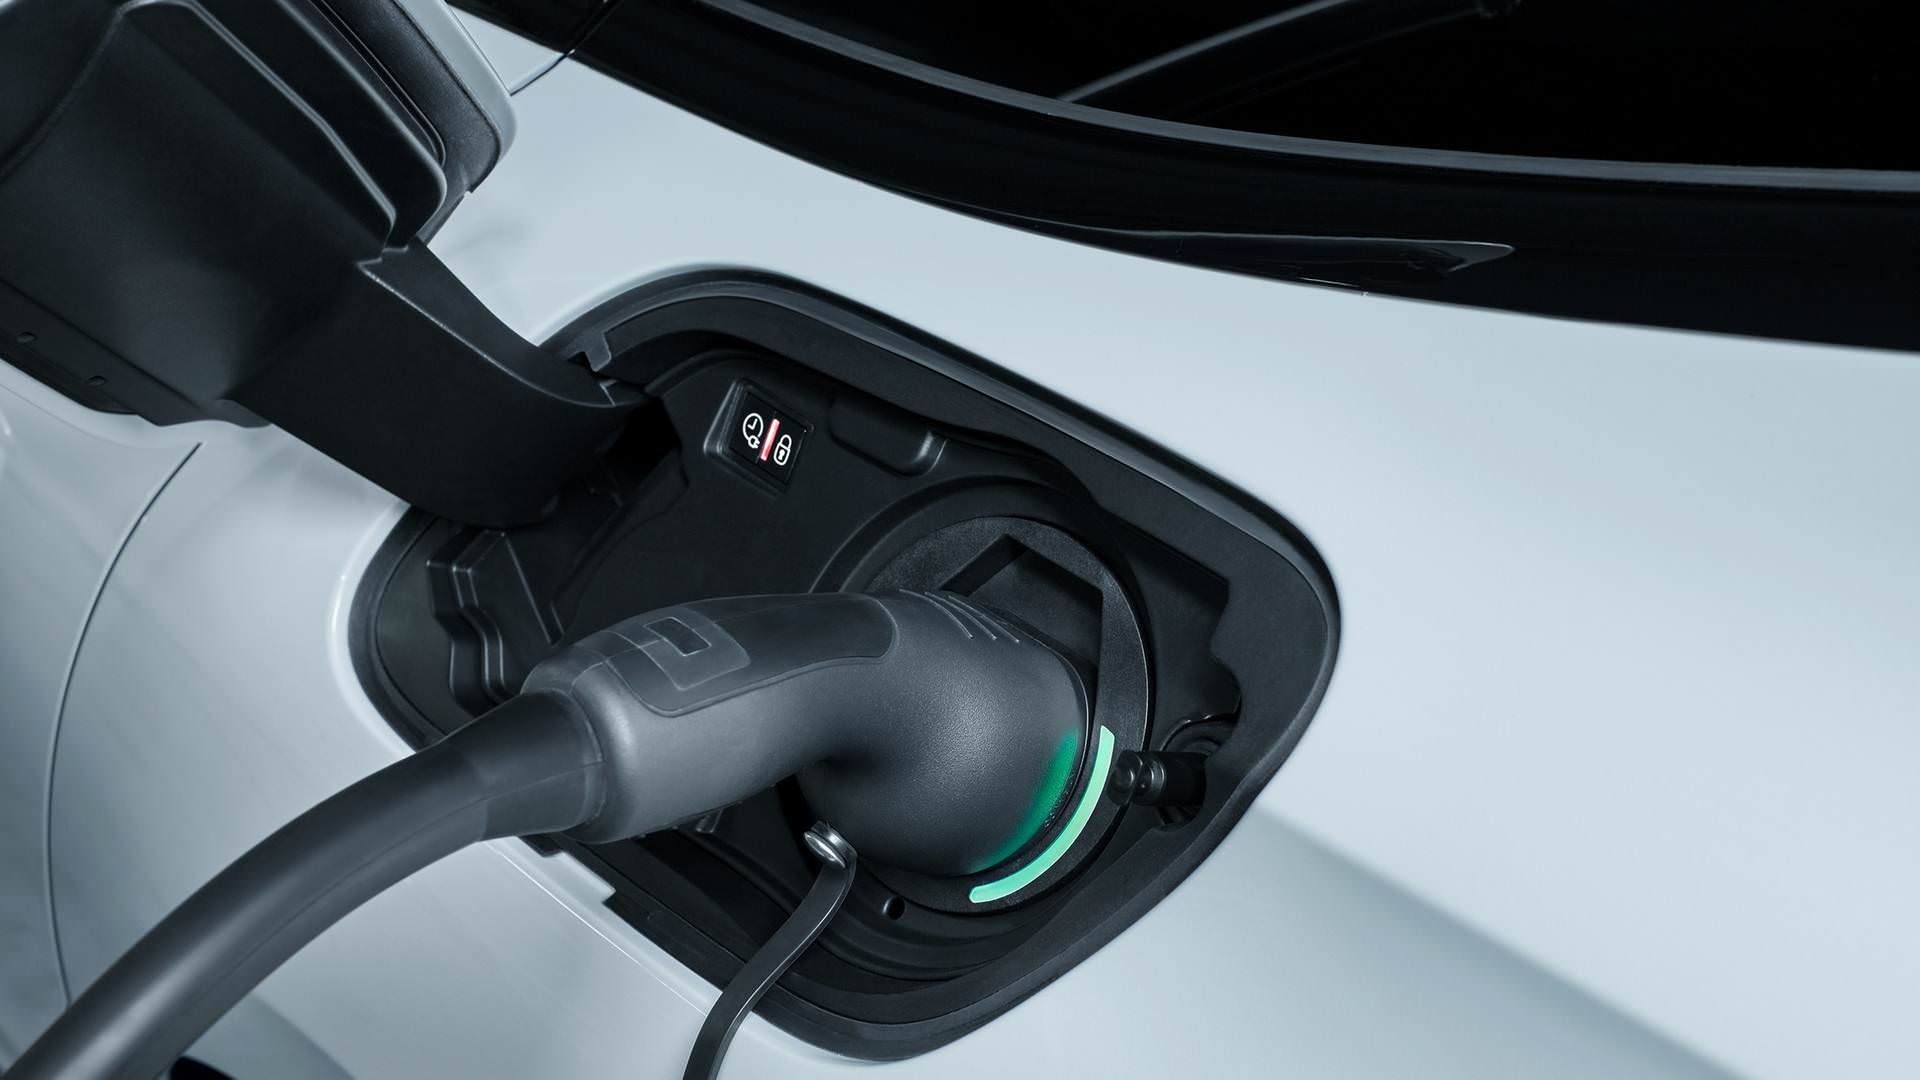 2019 Peugeot 3008 508 Plug-In Hybrid / پژو 3008 و پژو 508 پلاگین هیبرید 